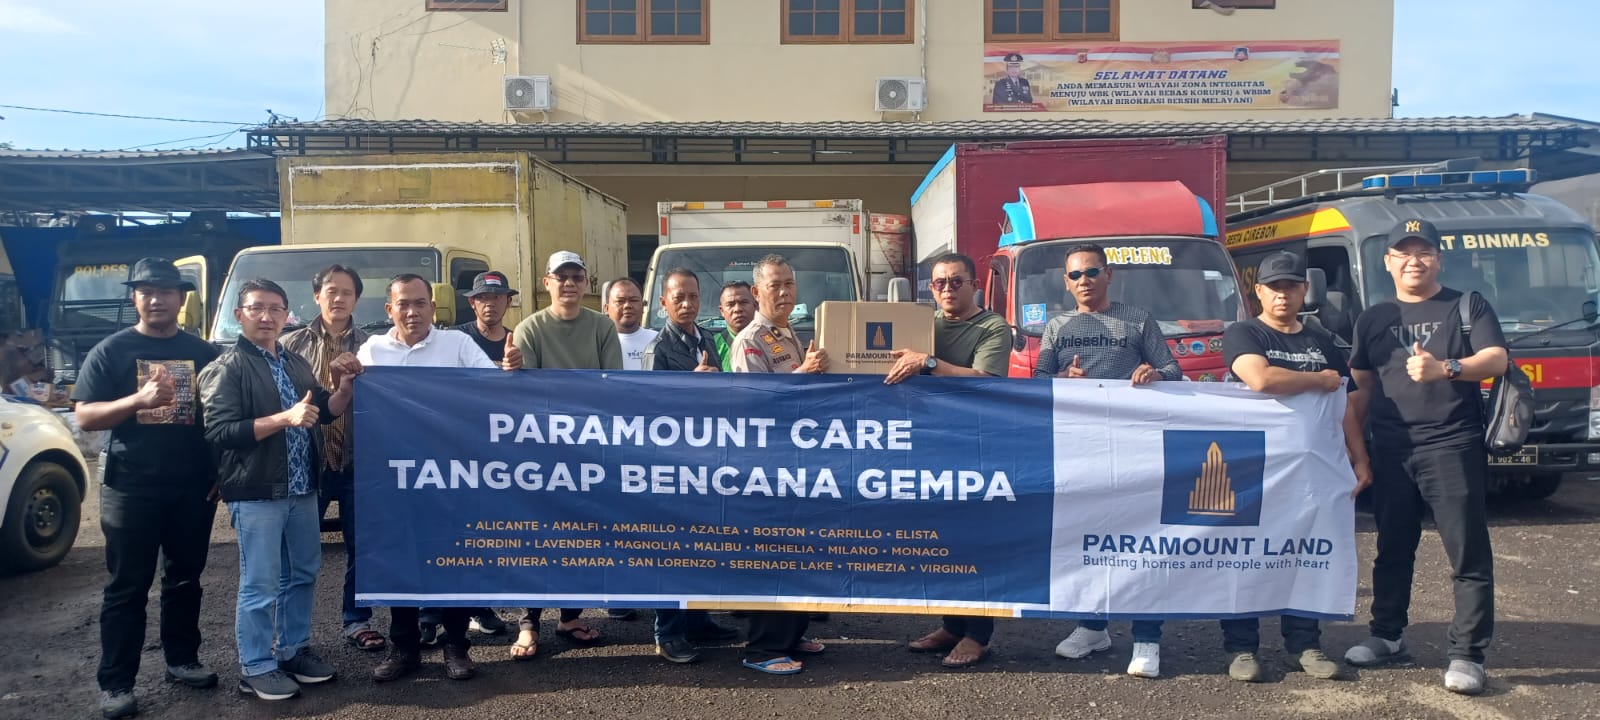 Paramount Land Salurkan Bantuan Gempa Cianjur